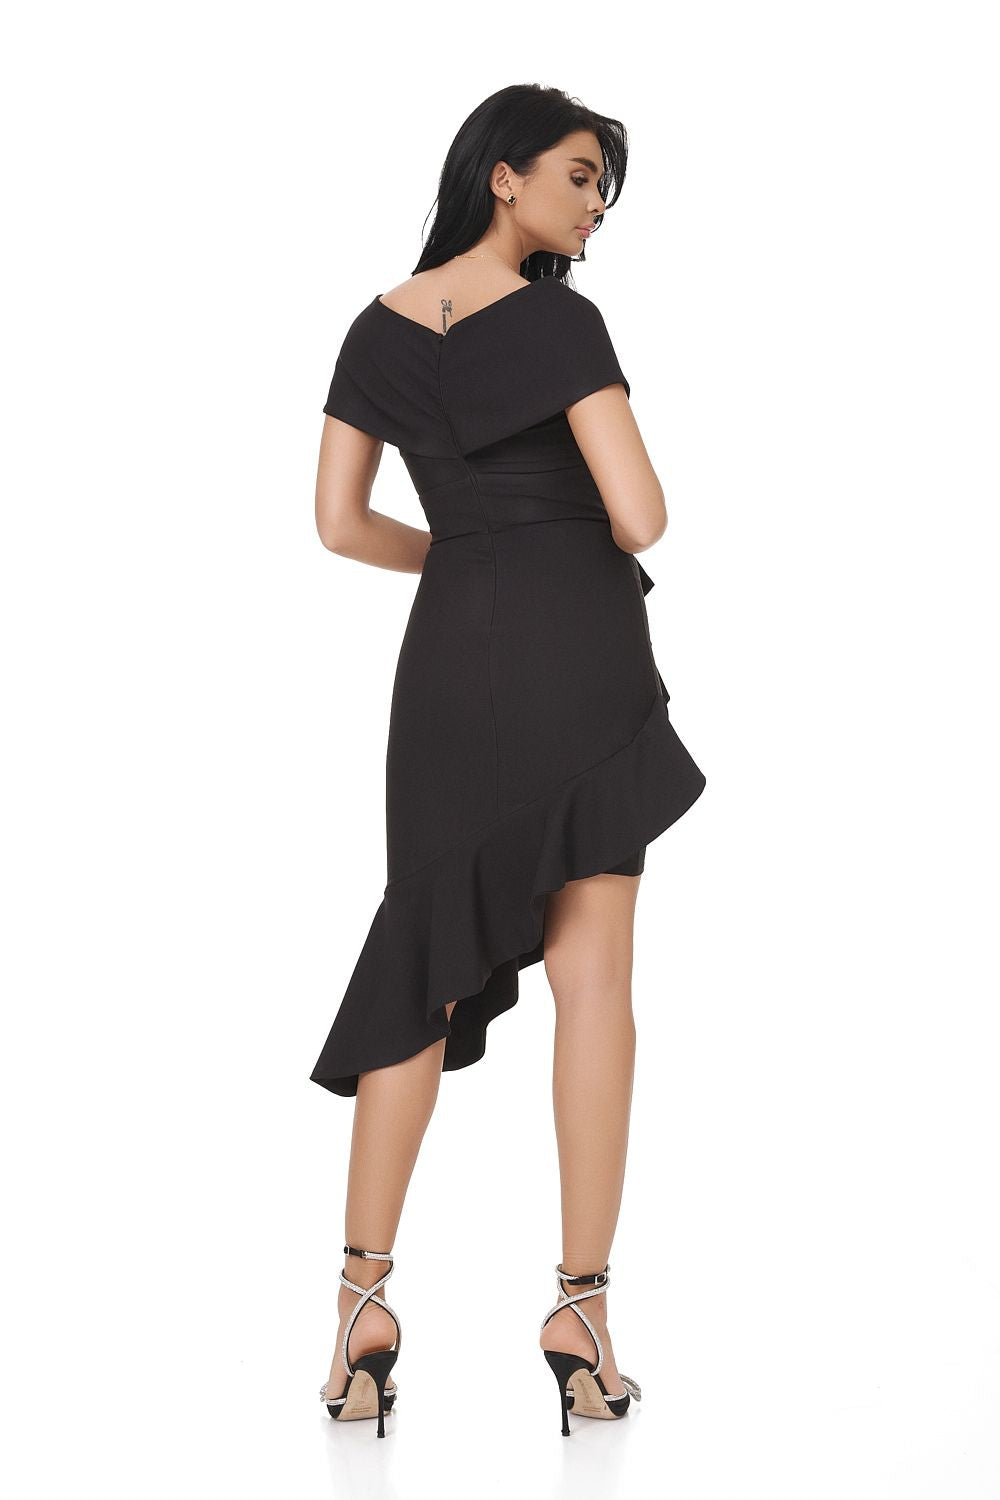 Black Grayson Bogas women's midi dress made of wool fabric